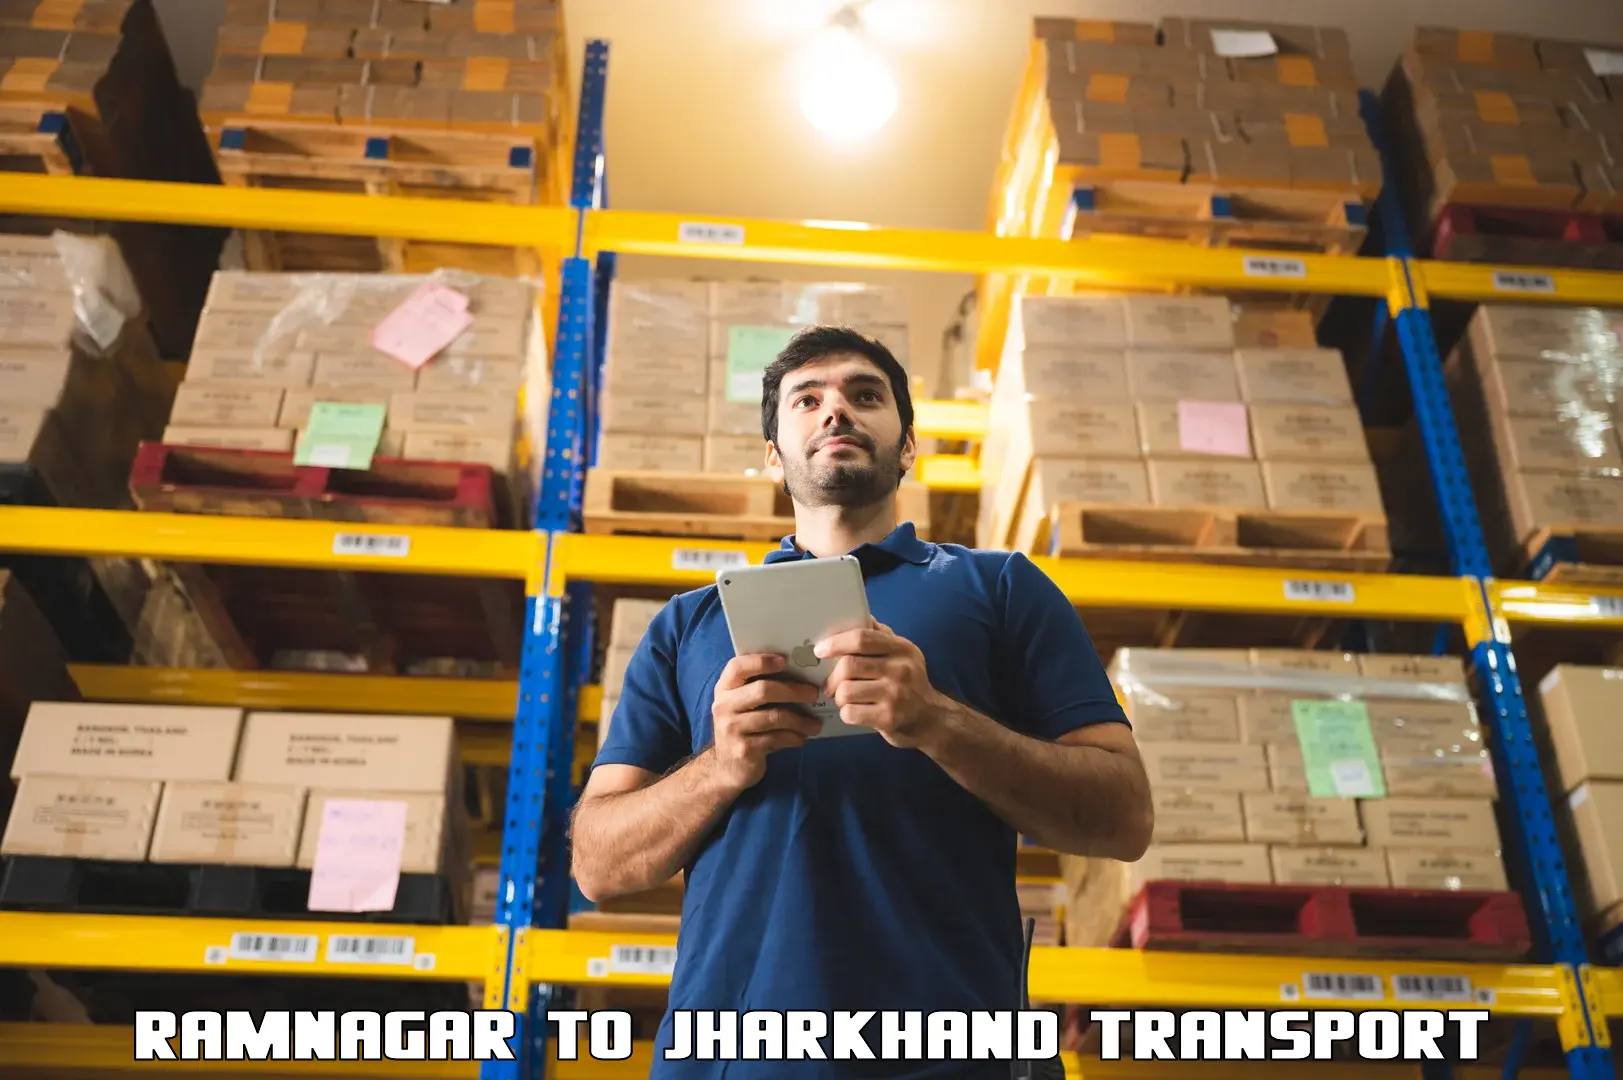 Shipping partner Ramnagar to Jamshedpur